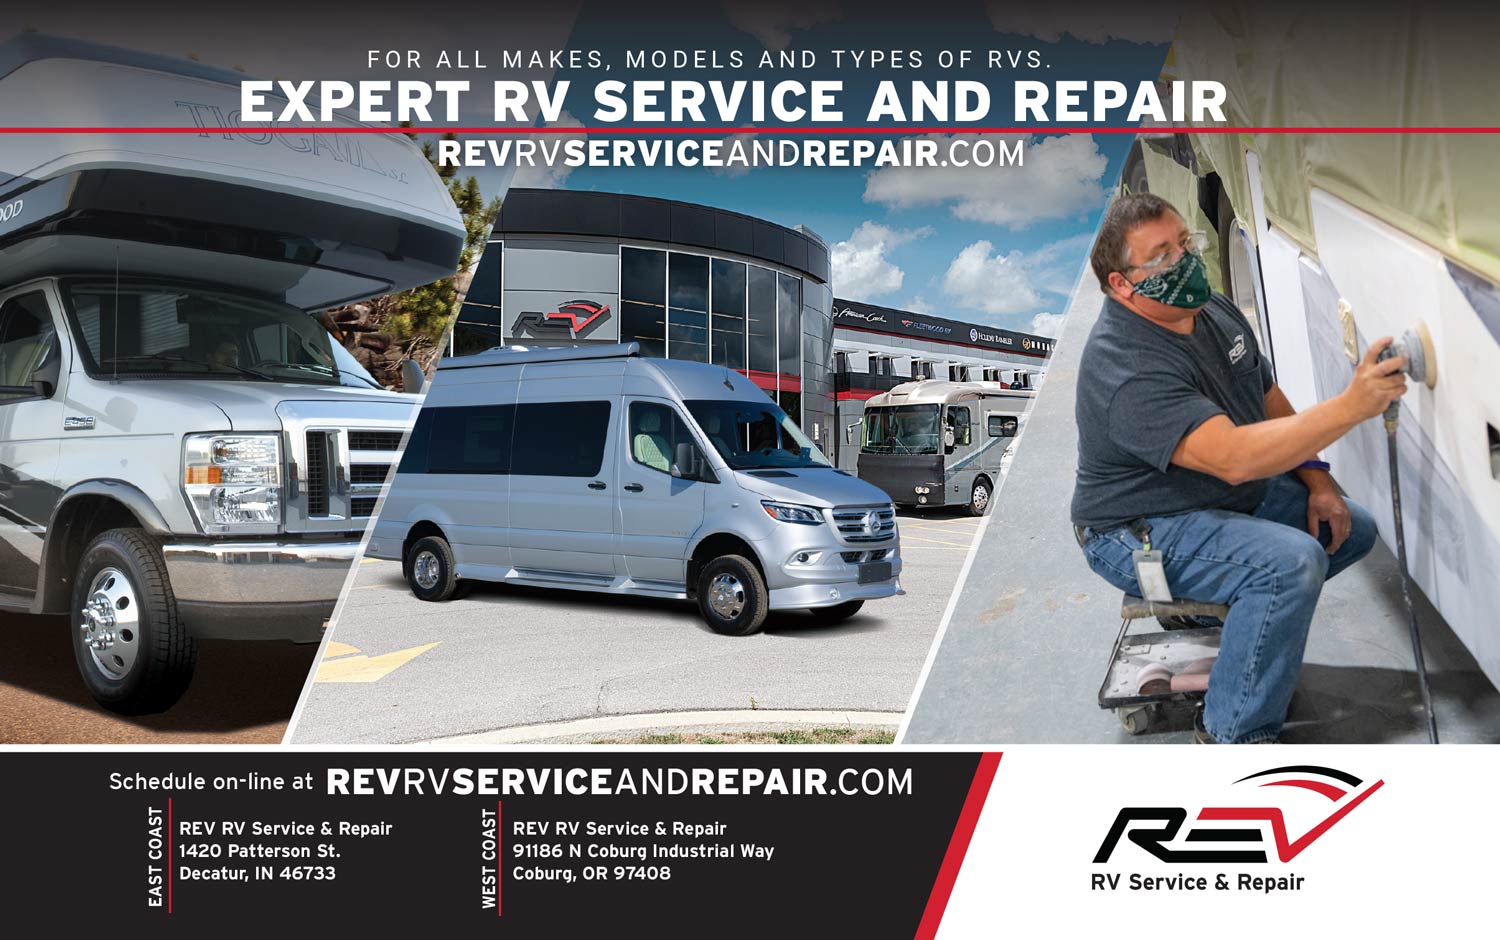 REV RV Services & Repair Advertisement